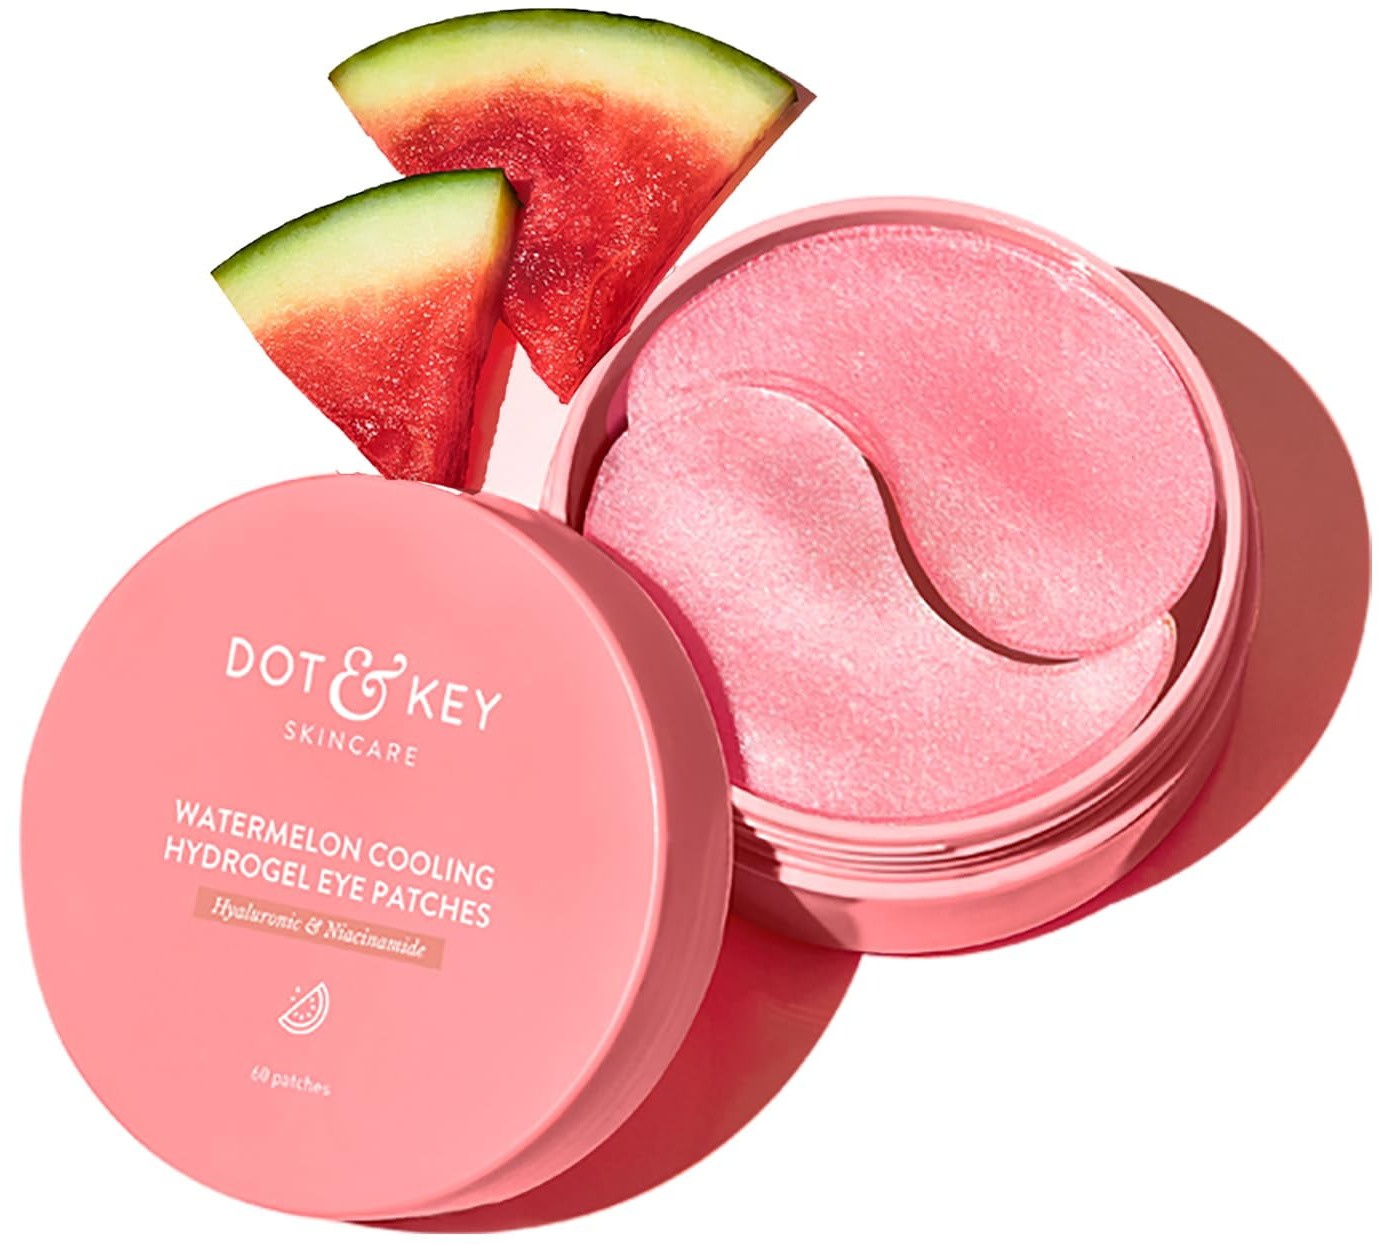 Dot & Key Watermelon Cooling Hydrogel Eye Patches